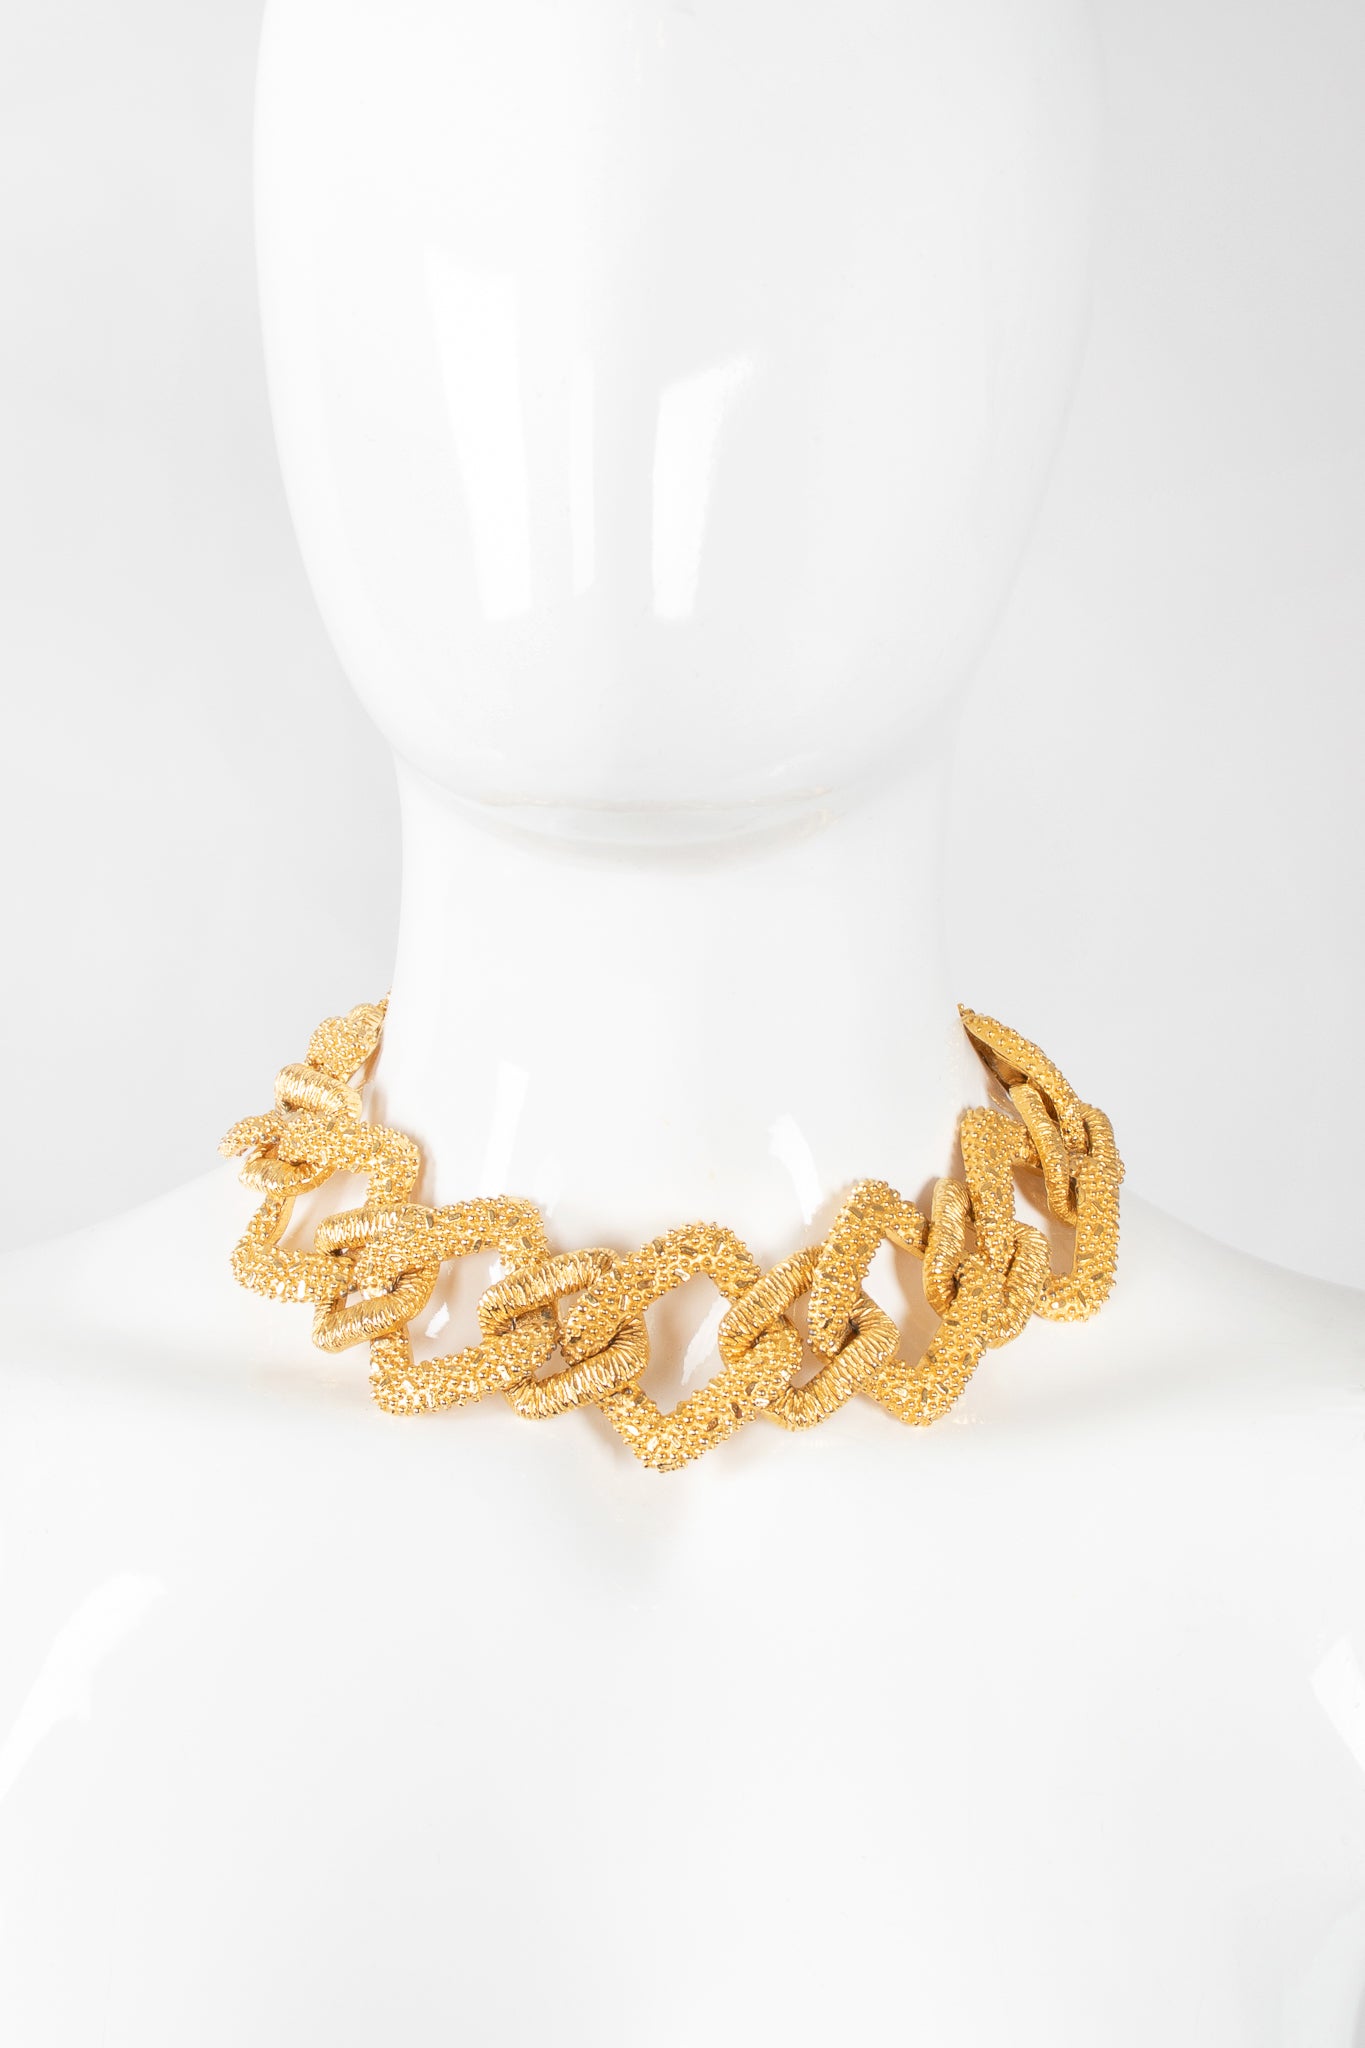 Recess Los Angeles Designer Consignment Vintage Mimi Di N Niscemi Textured Square Chain Collar Necklace Costume Gold Nugget